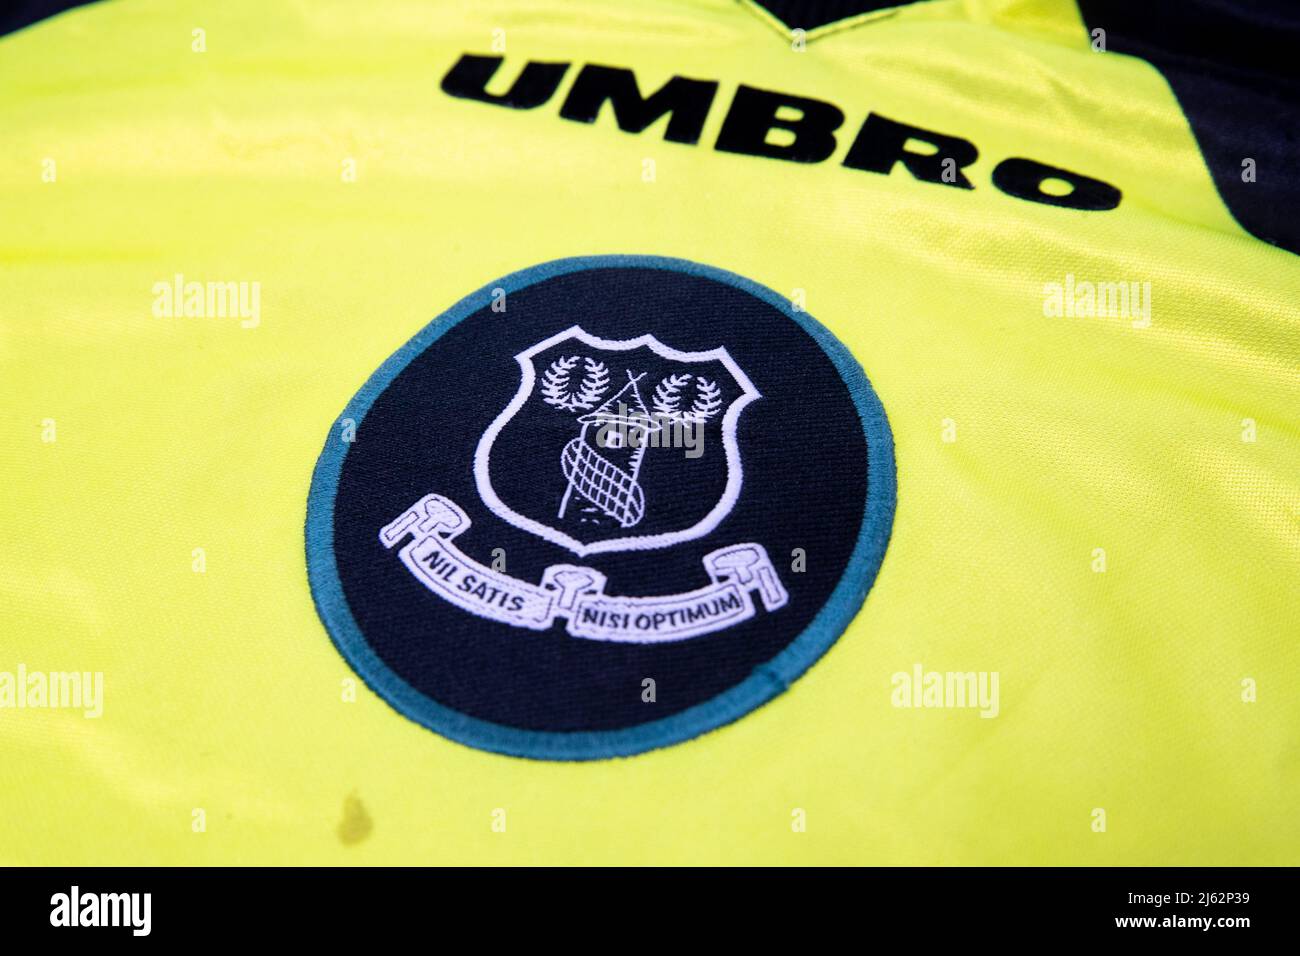 Everton logo badge on an Umbro football shirt Stock Photo